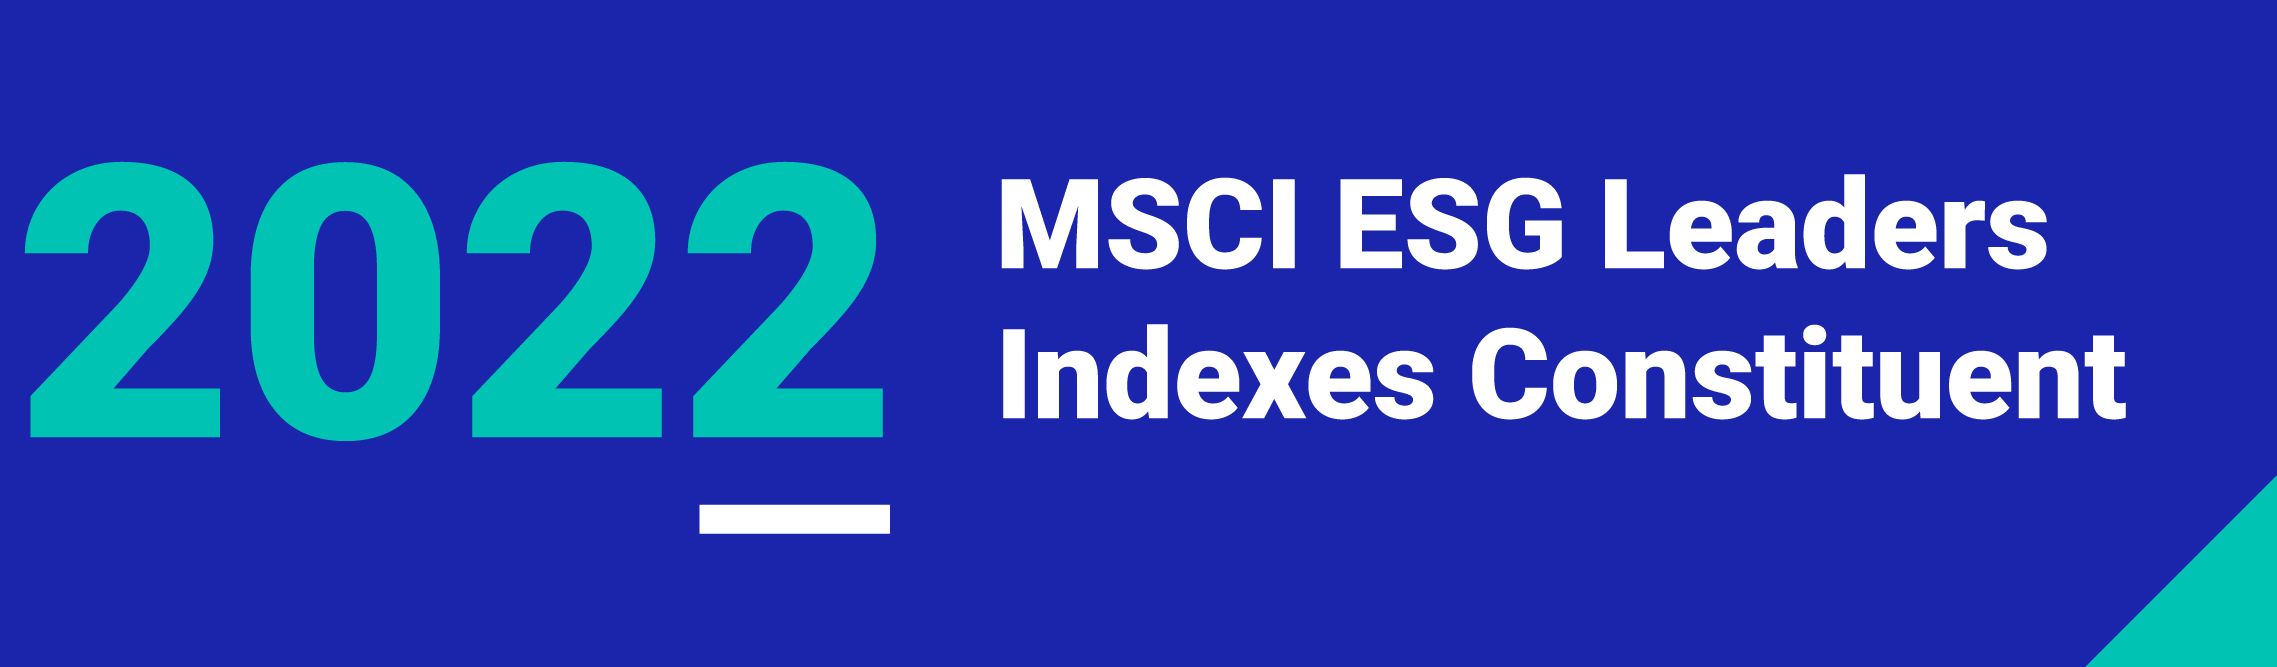 MSCI ESG Leaders Indexes Constituent 2022 ロゴ